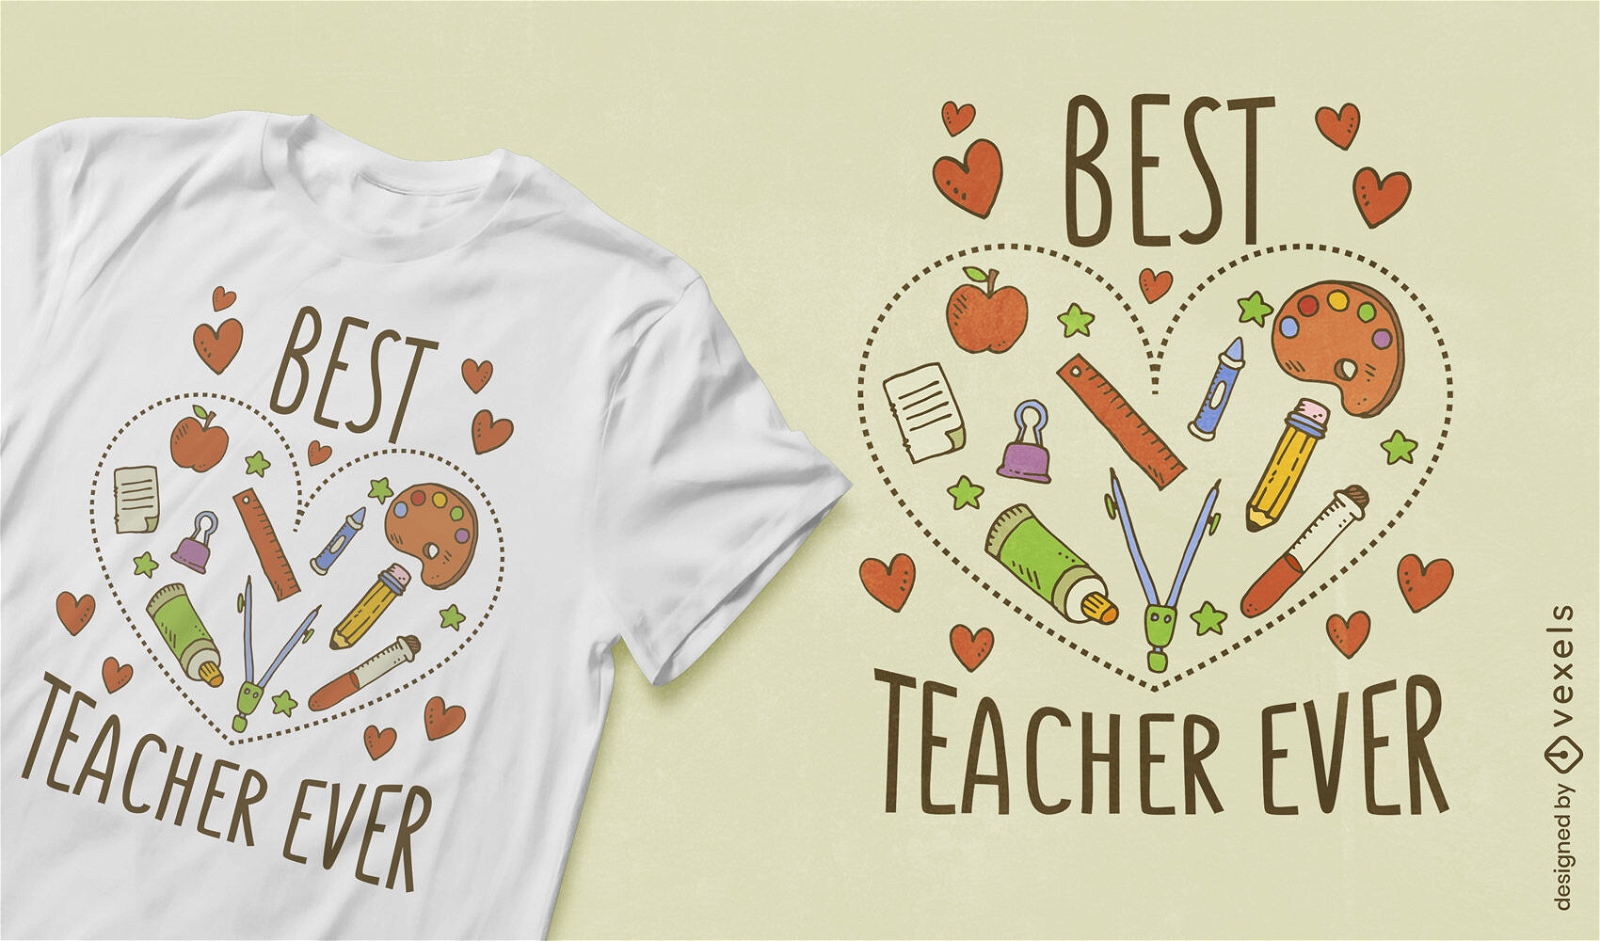 Best teacher quote t-shirt design